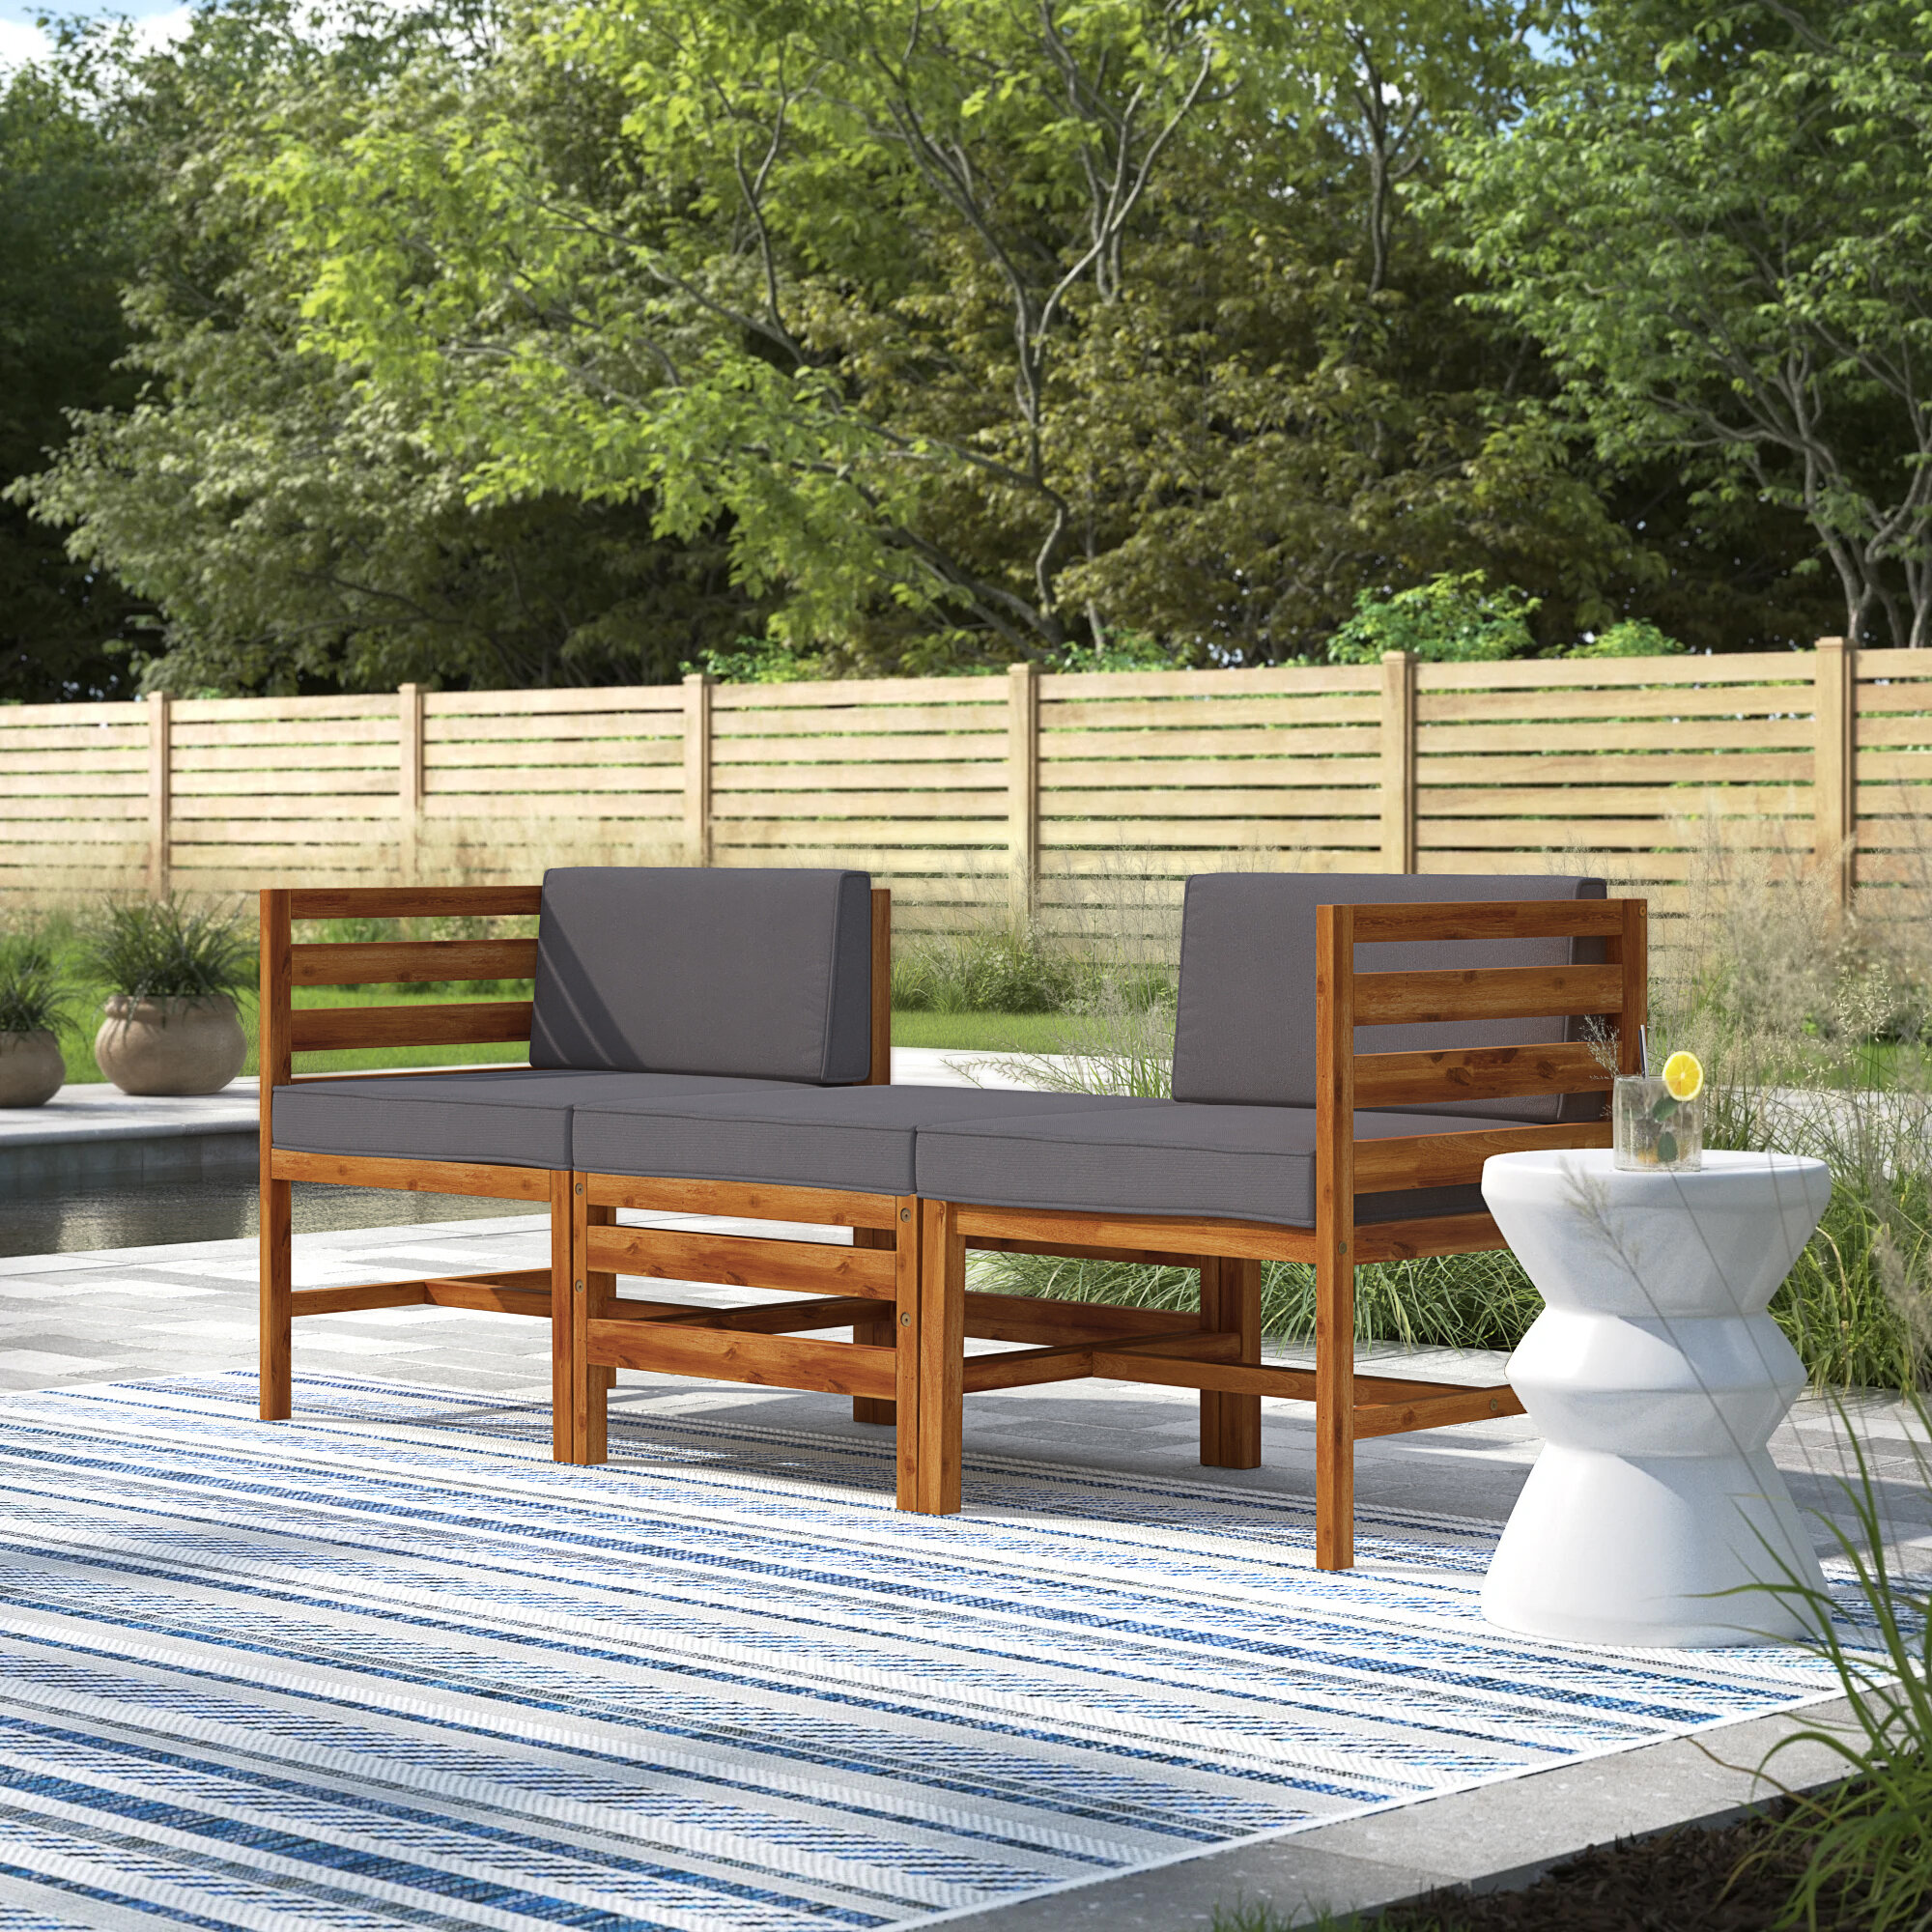 Royal Colonel Garden Deck Chair Reclining Outdoor SunloungerBlue/Silver